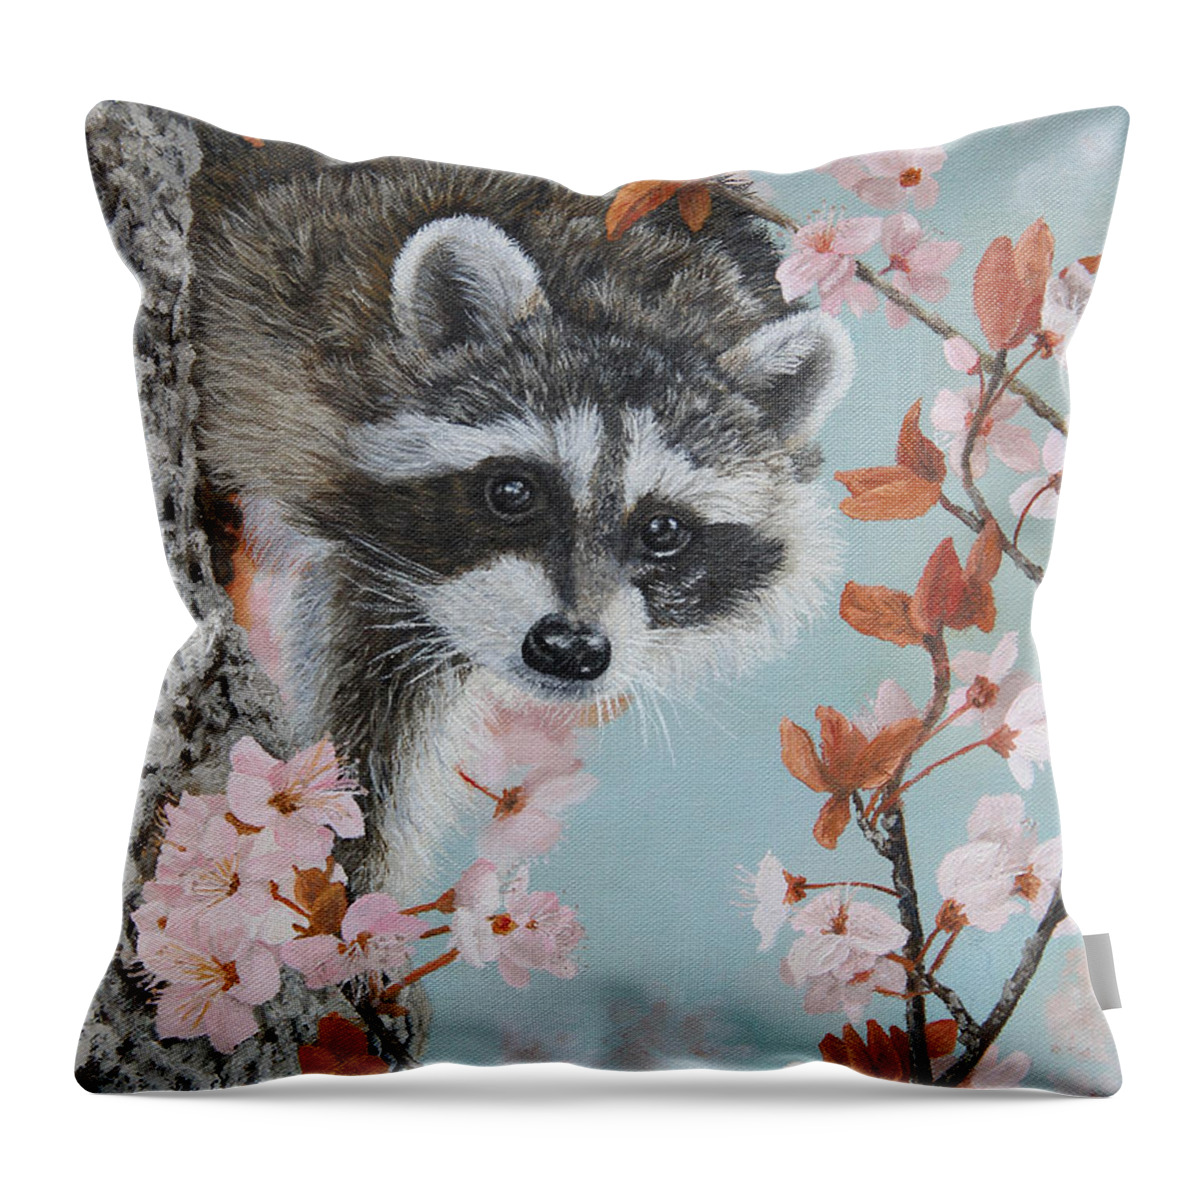 Raccoon Throw Pillow featuring the painting Little Rascal by Johanna Lerwick